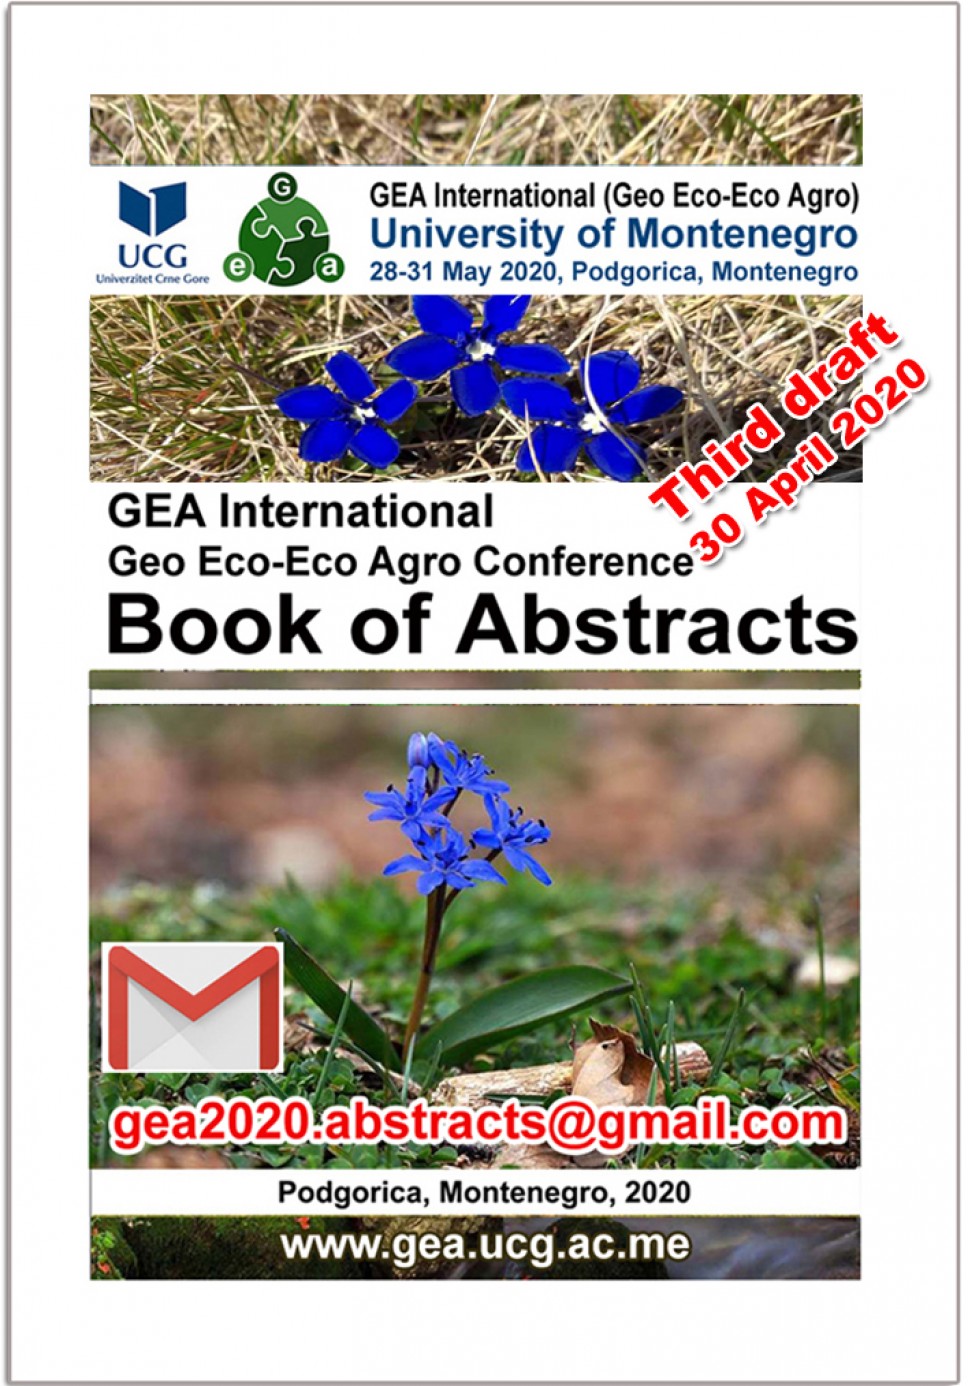 Objavljena knjiga apstrakata: GEA International (Geo Eco-Eco Agro) Conference, 28-31 May 2020, Podgorica, Montenegro